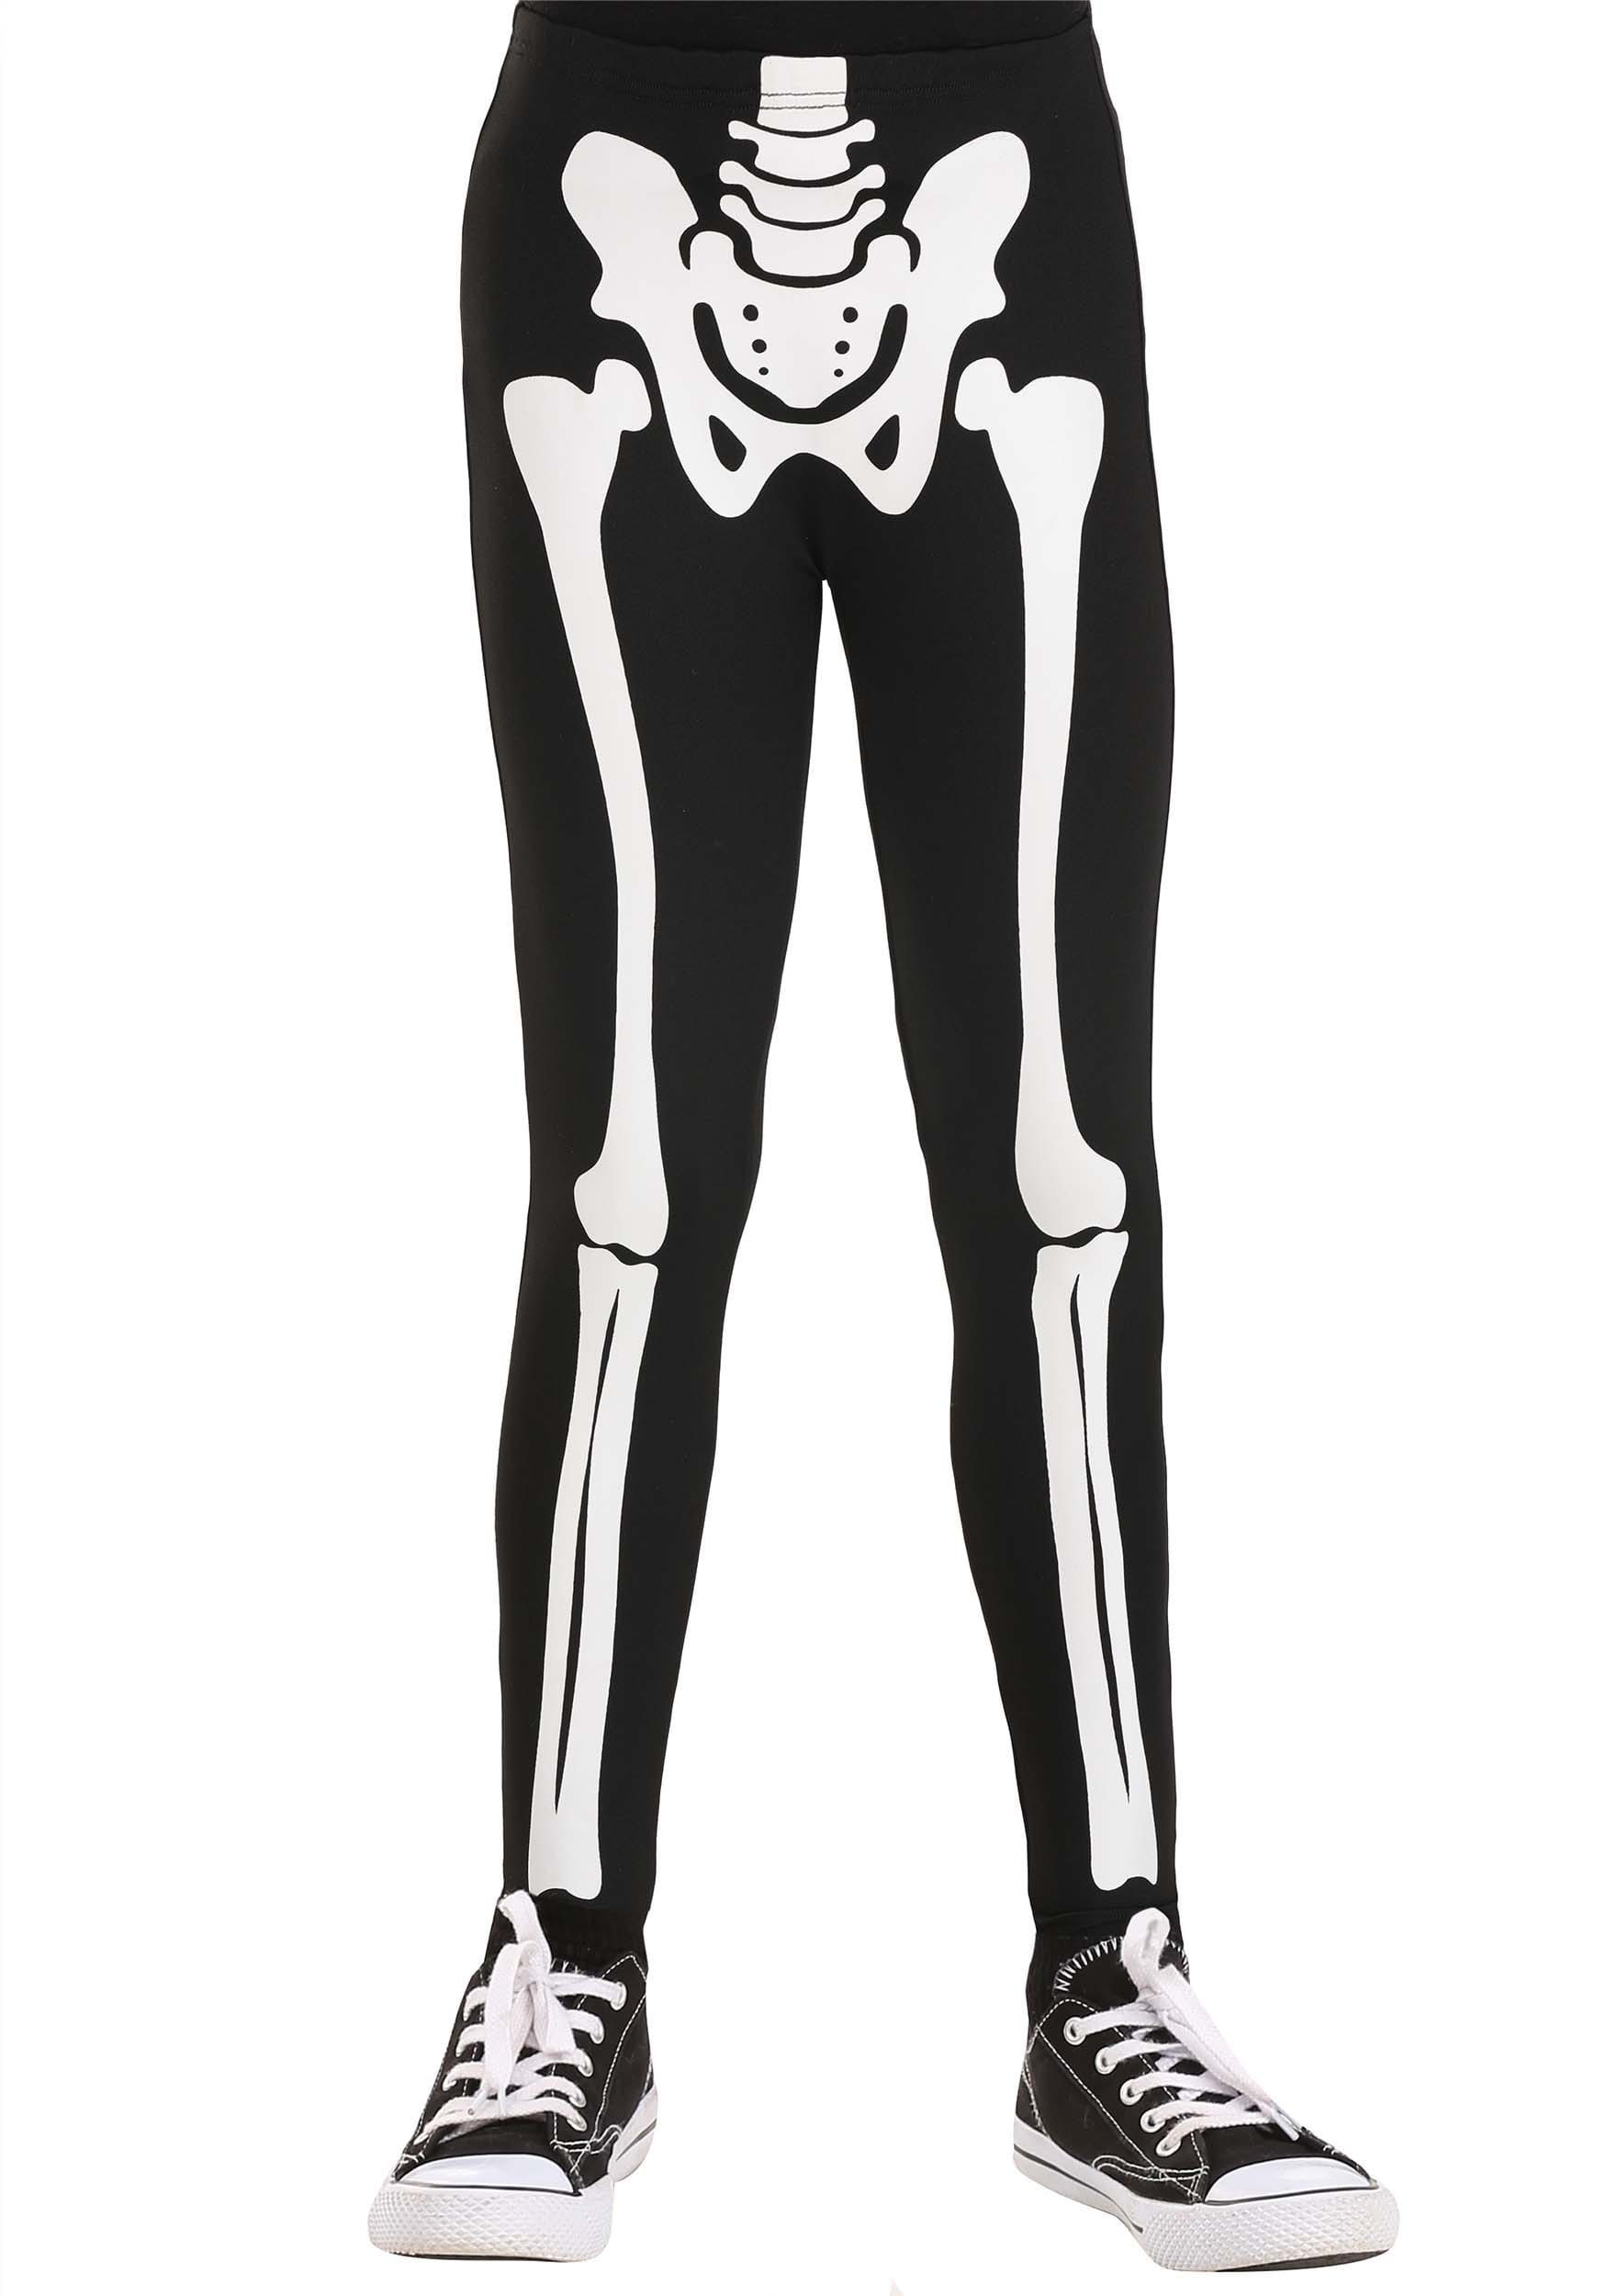 DIY Inspiration: Skeleton Leggings